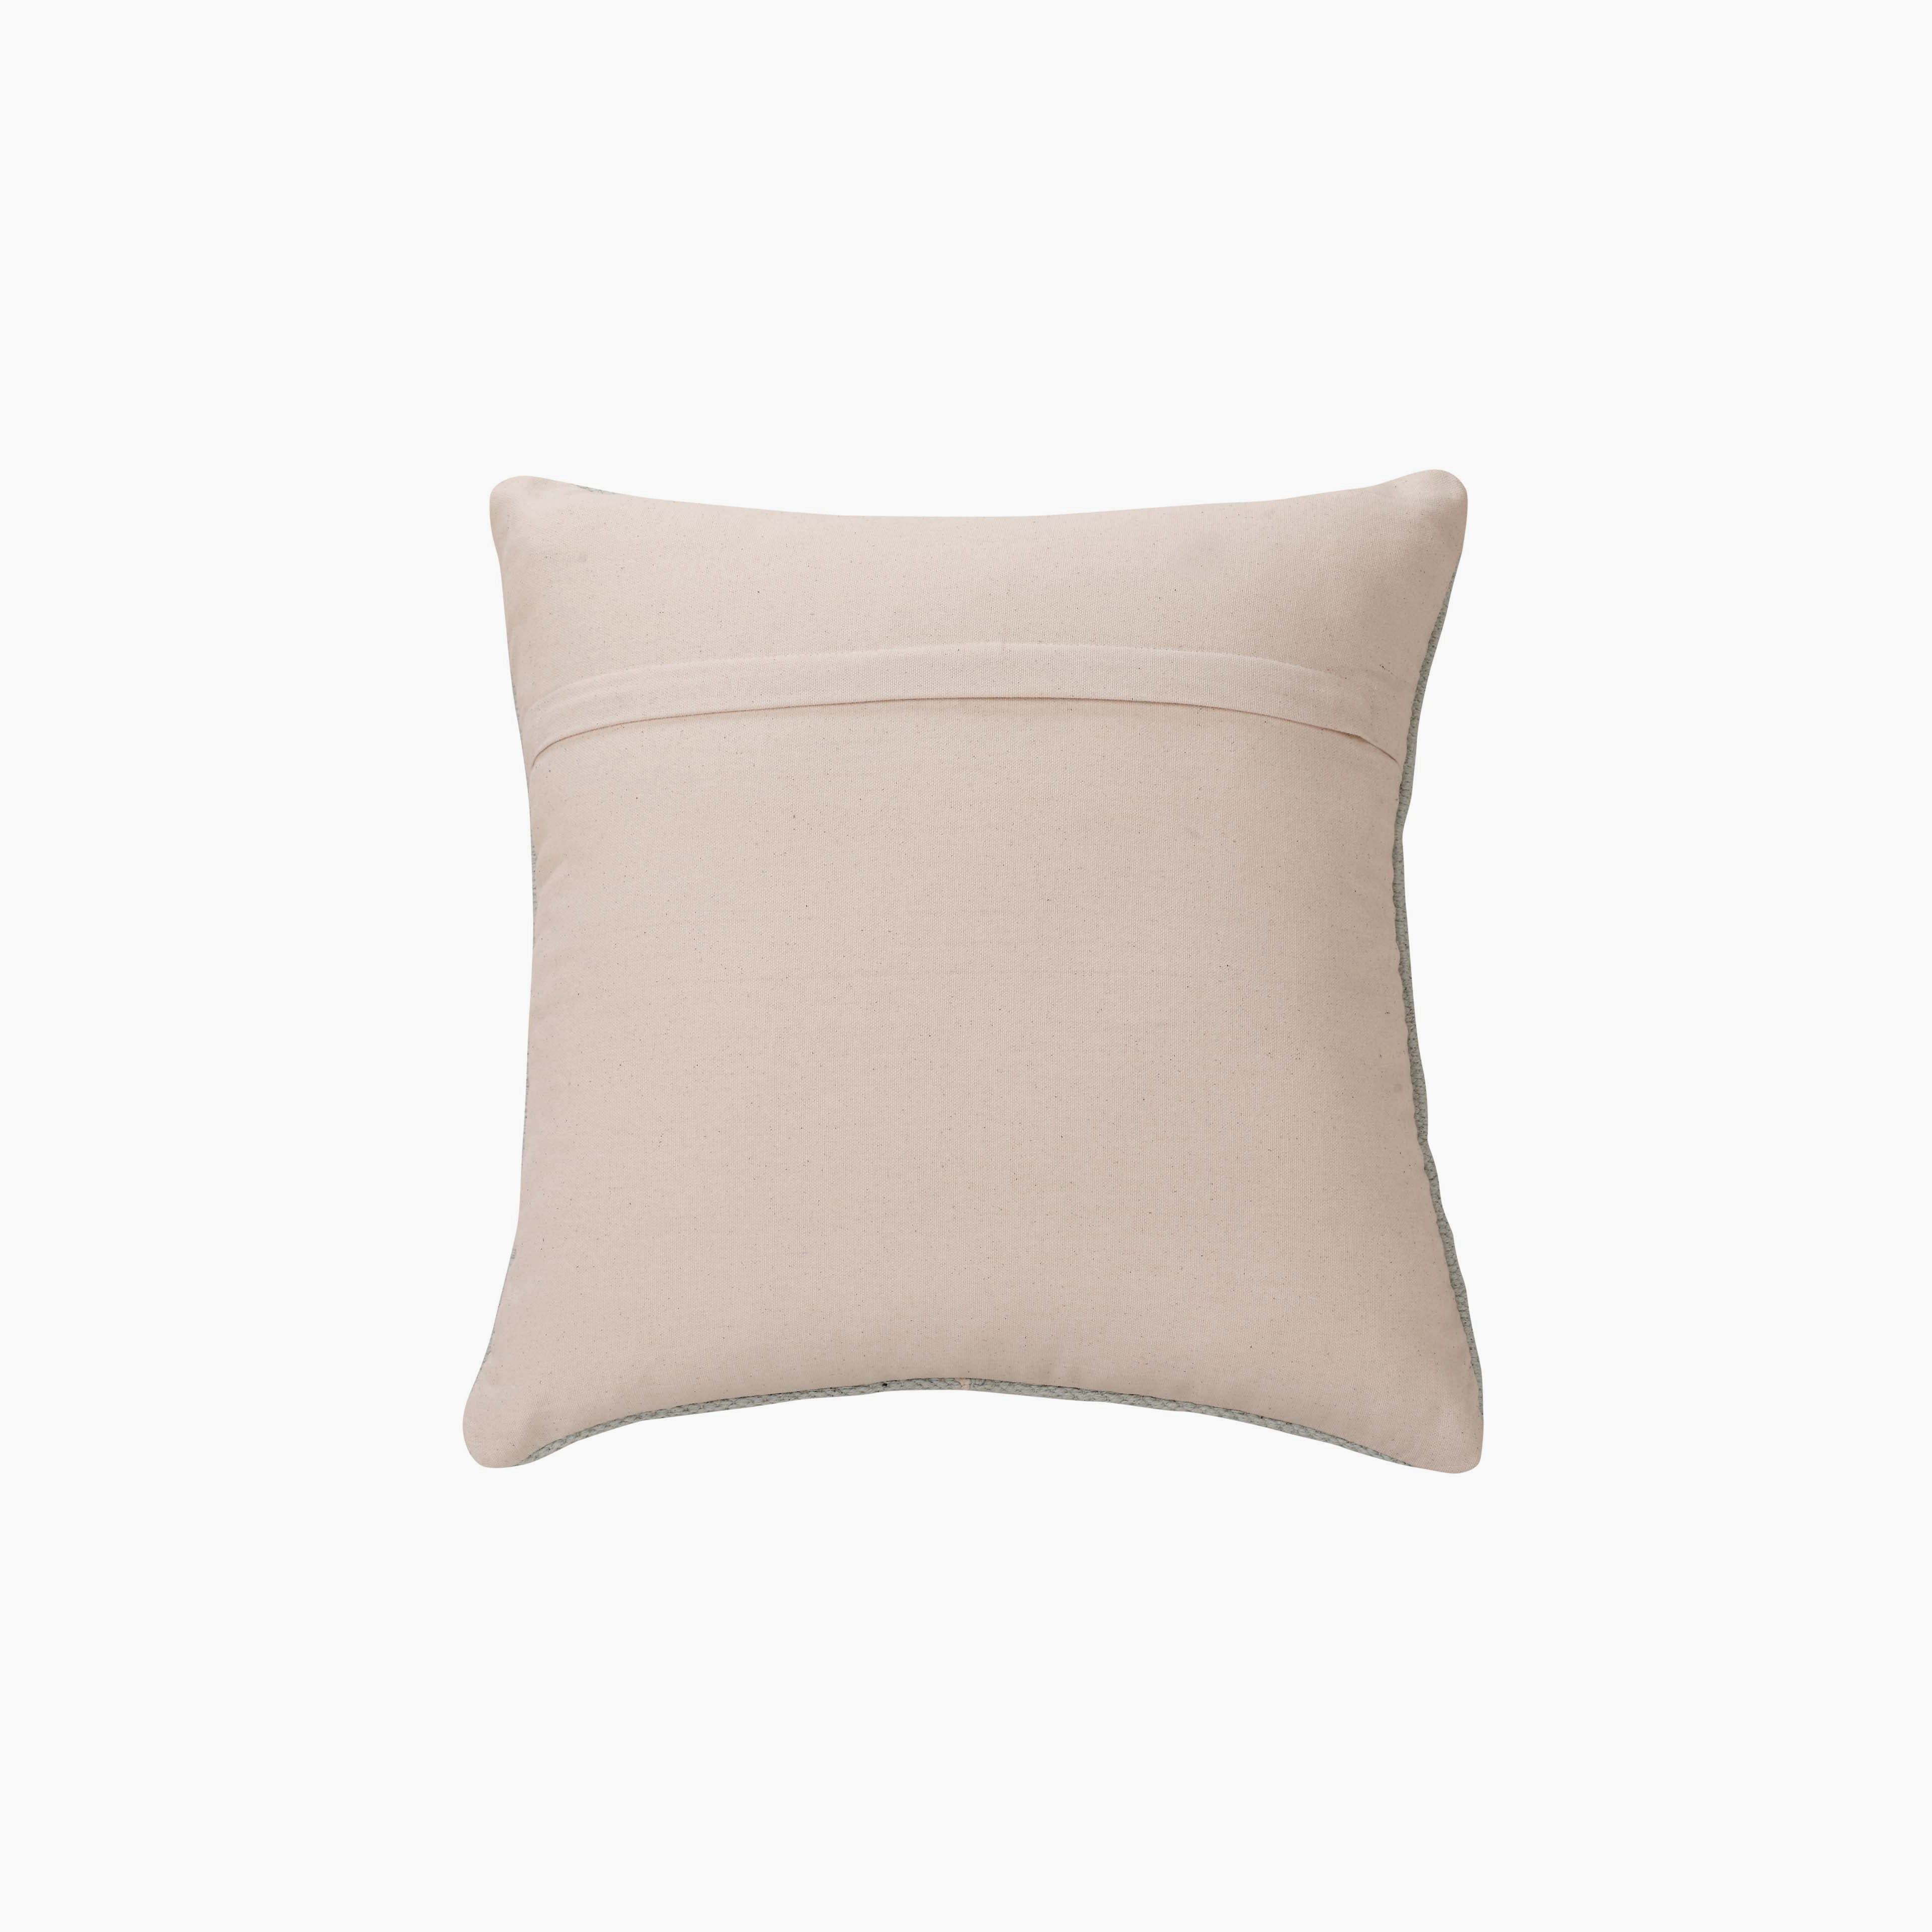 Diamond Accent Pillow, Blue - 18x18 inch